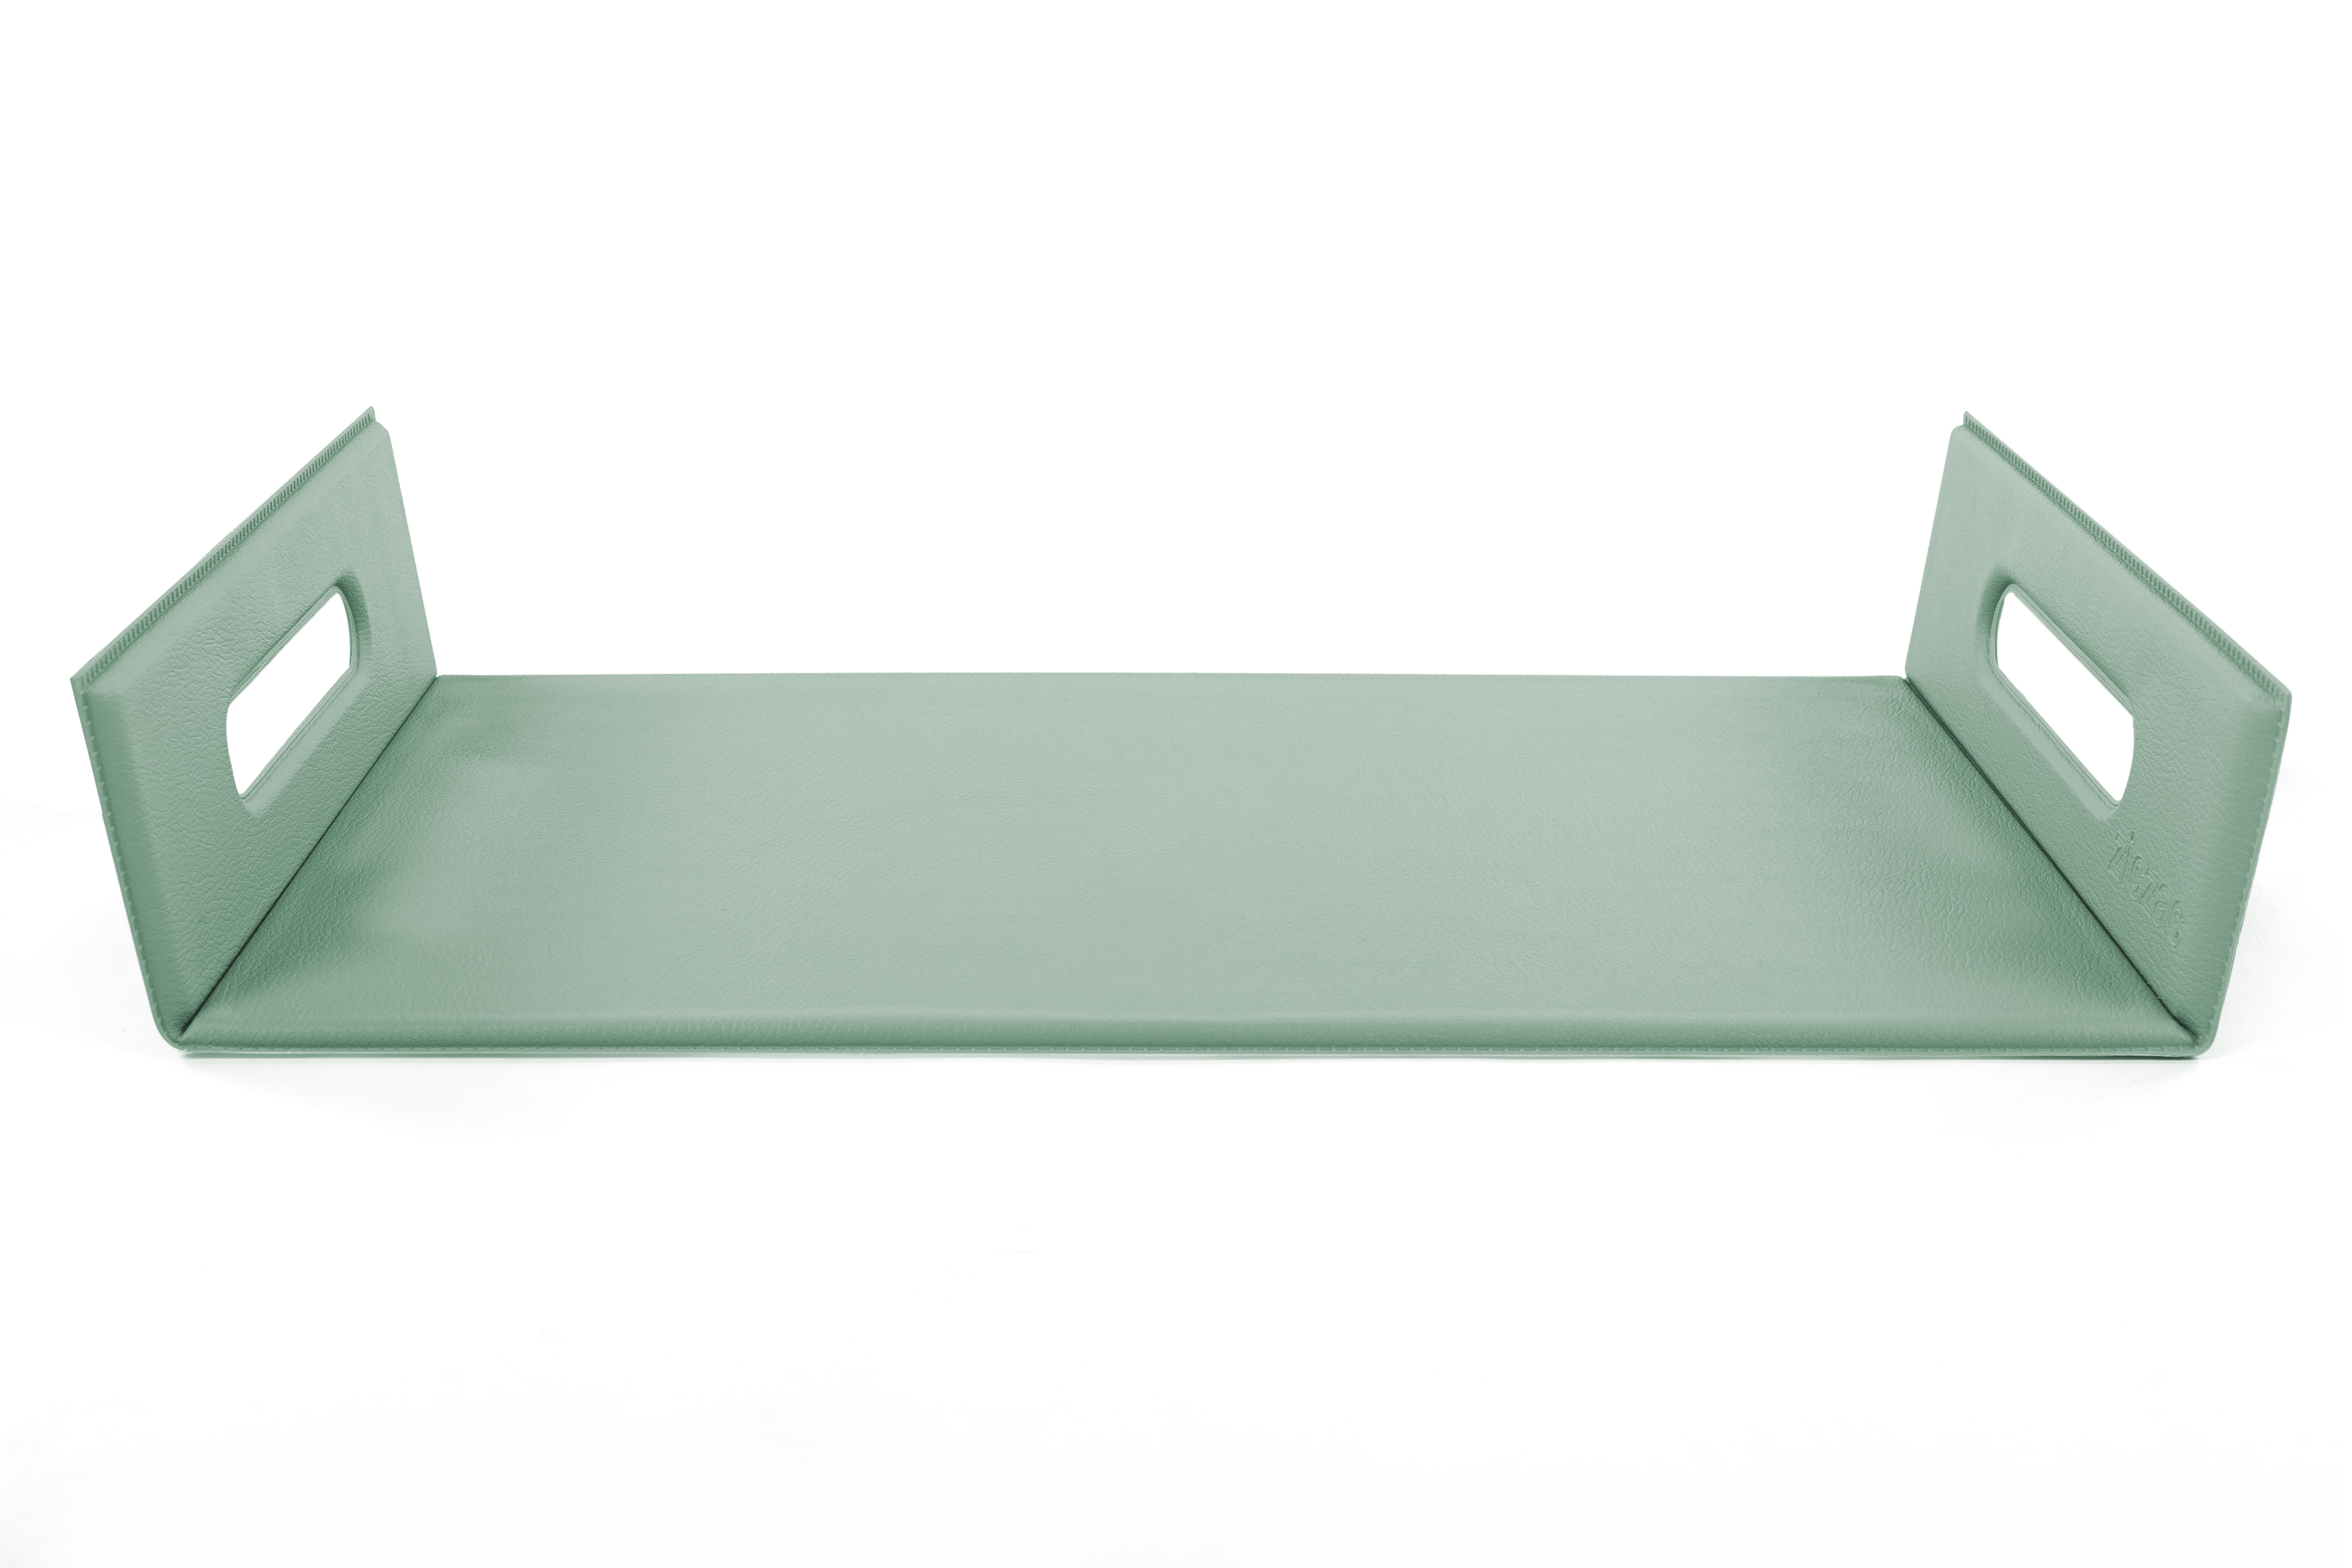 Plateau TOGO - Leather look imitation- 20x32 + 2x5.5 cm, green